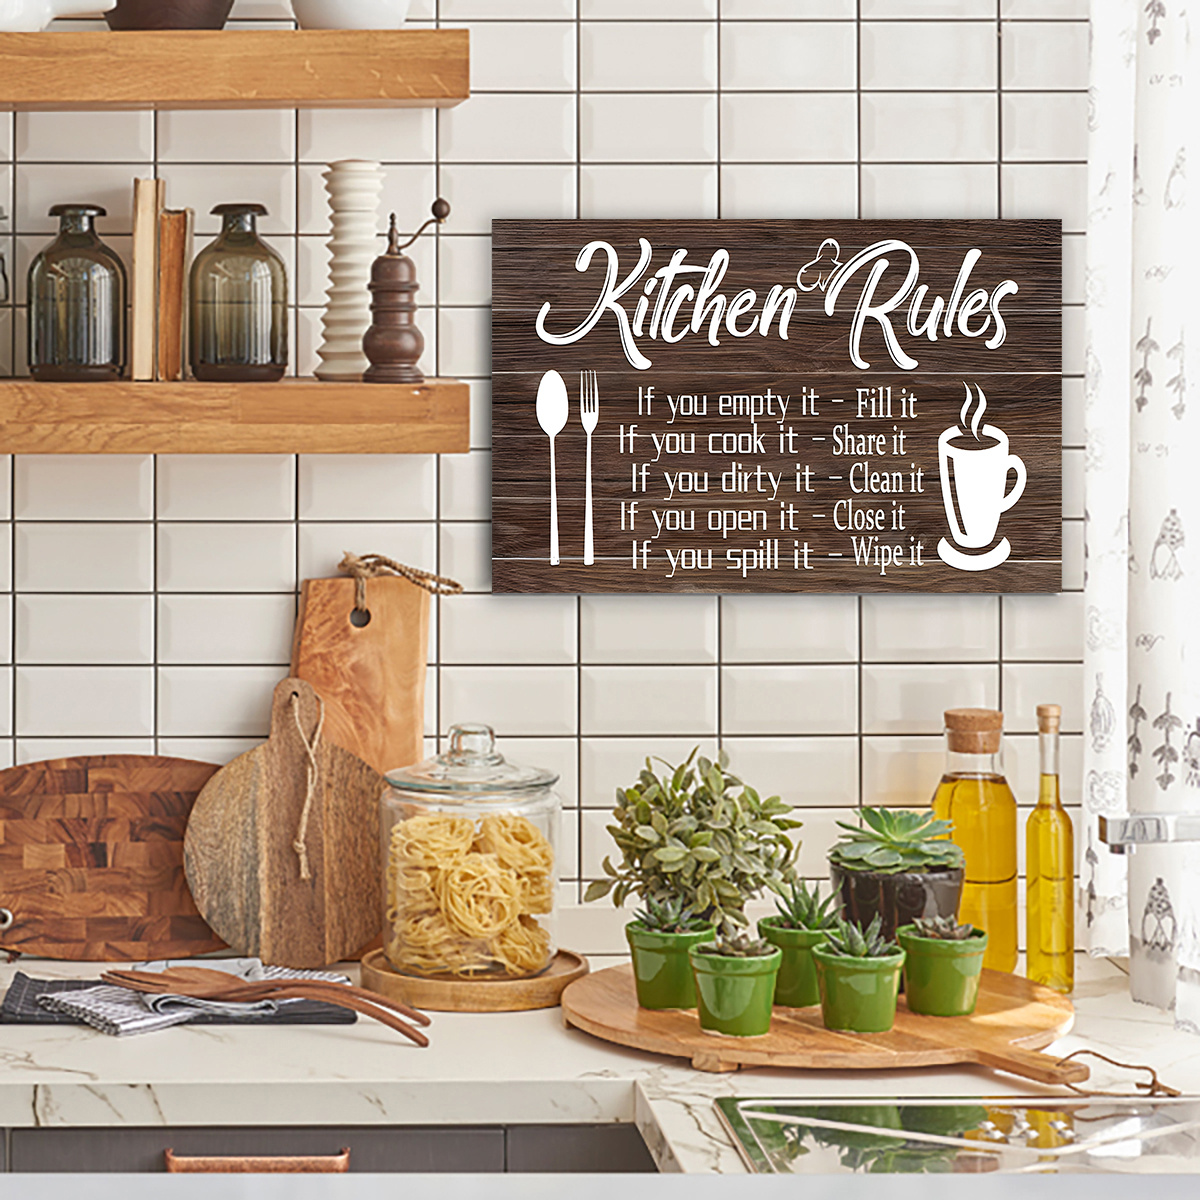 The Secret To A Clean Kitchen, Funny Kitchen Signs, Kitchen Decor, Bake